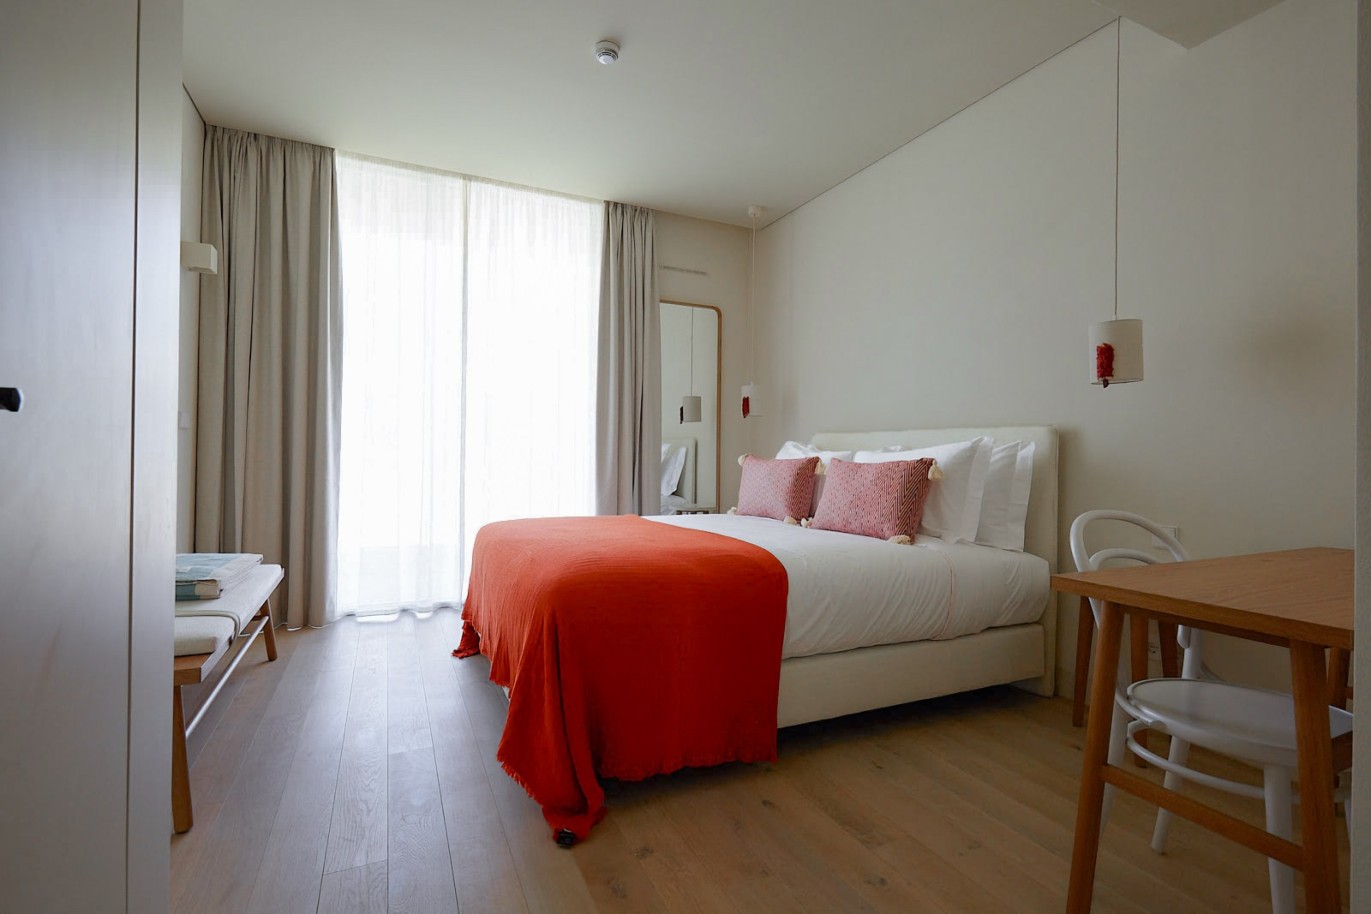 2 bedroom apartment in resort, for sale in Porches, Algarve_230543